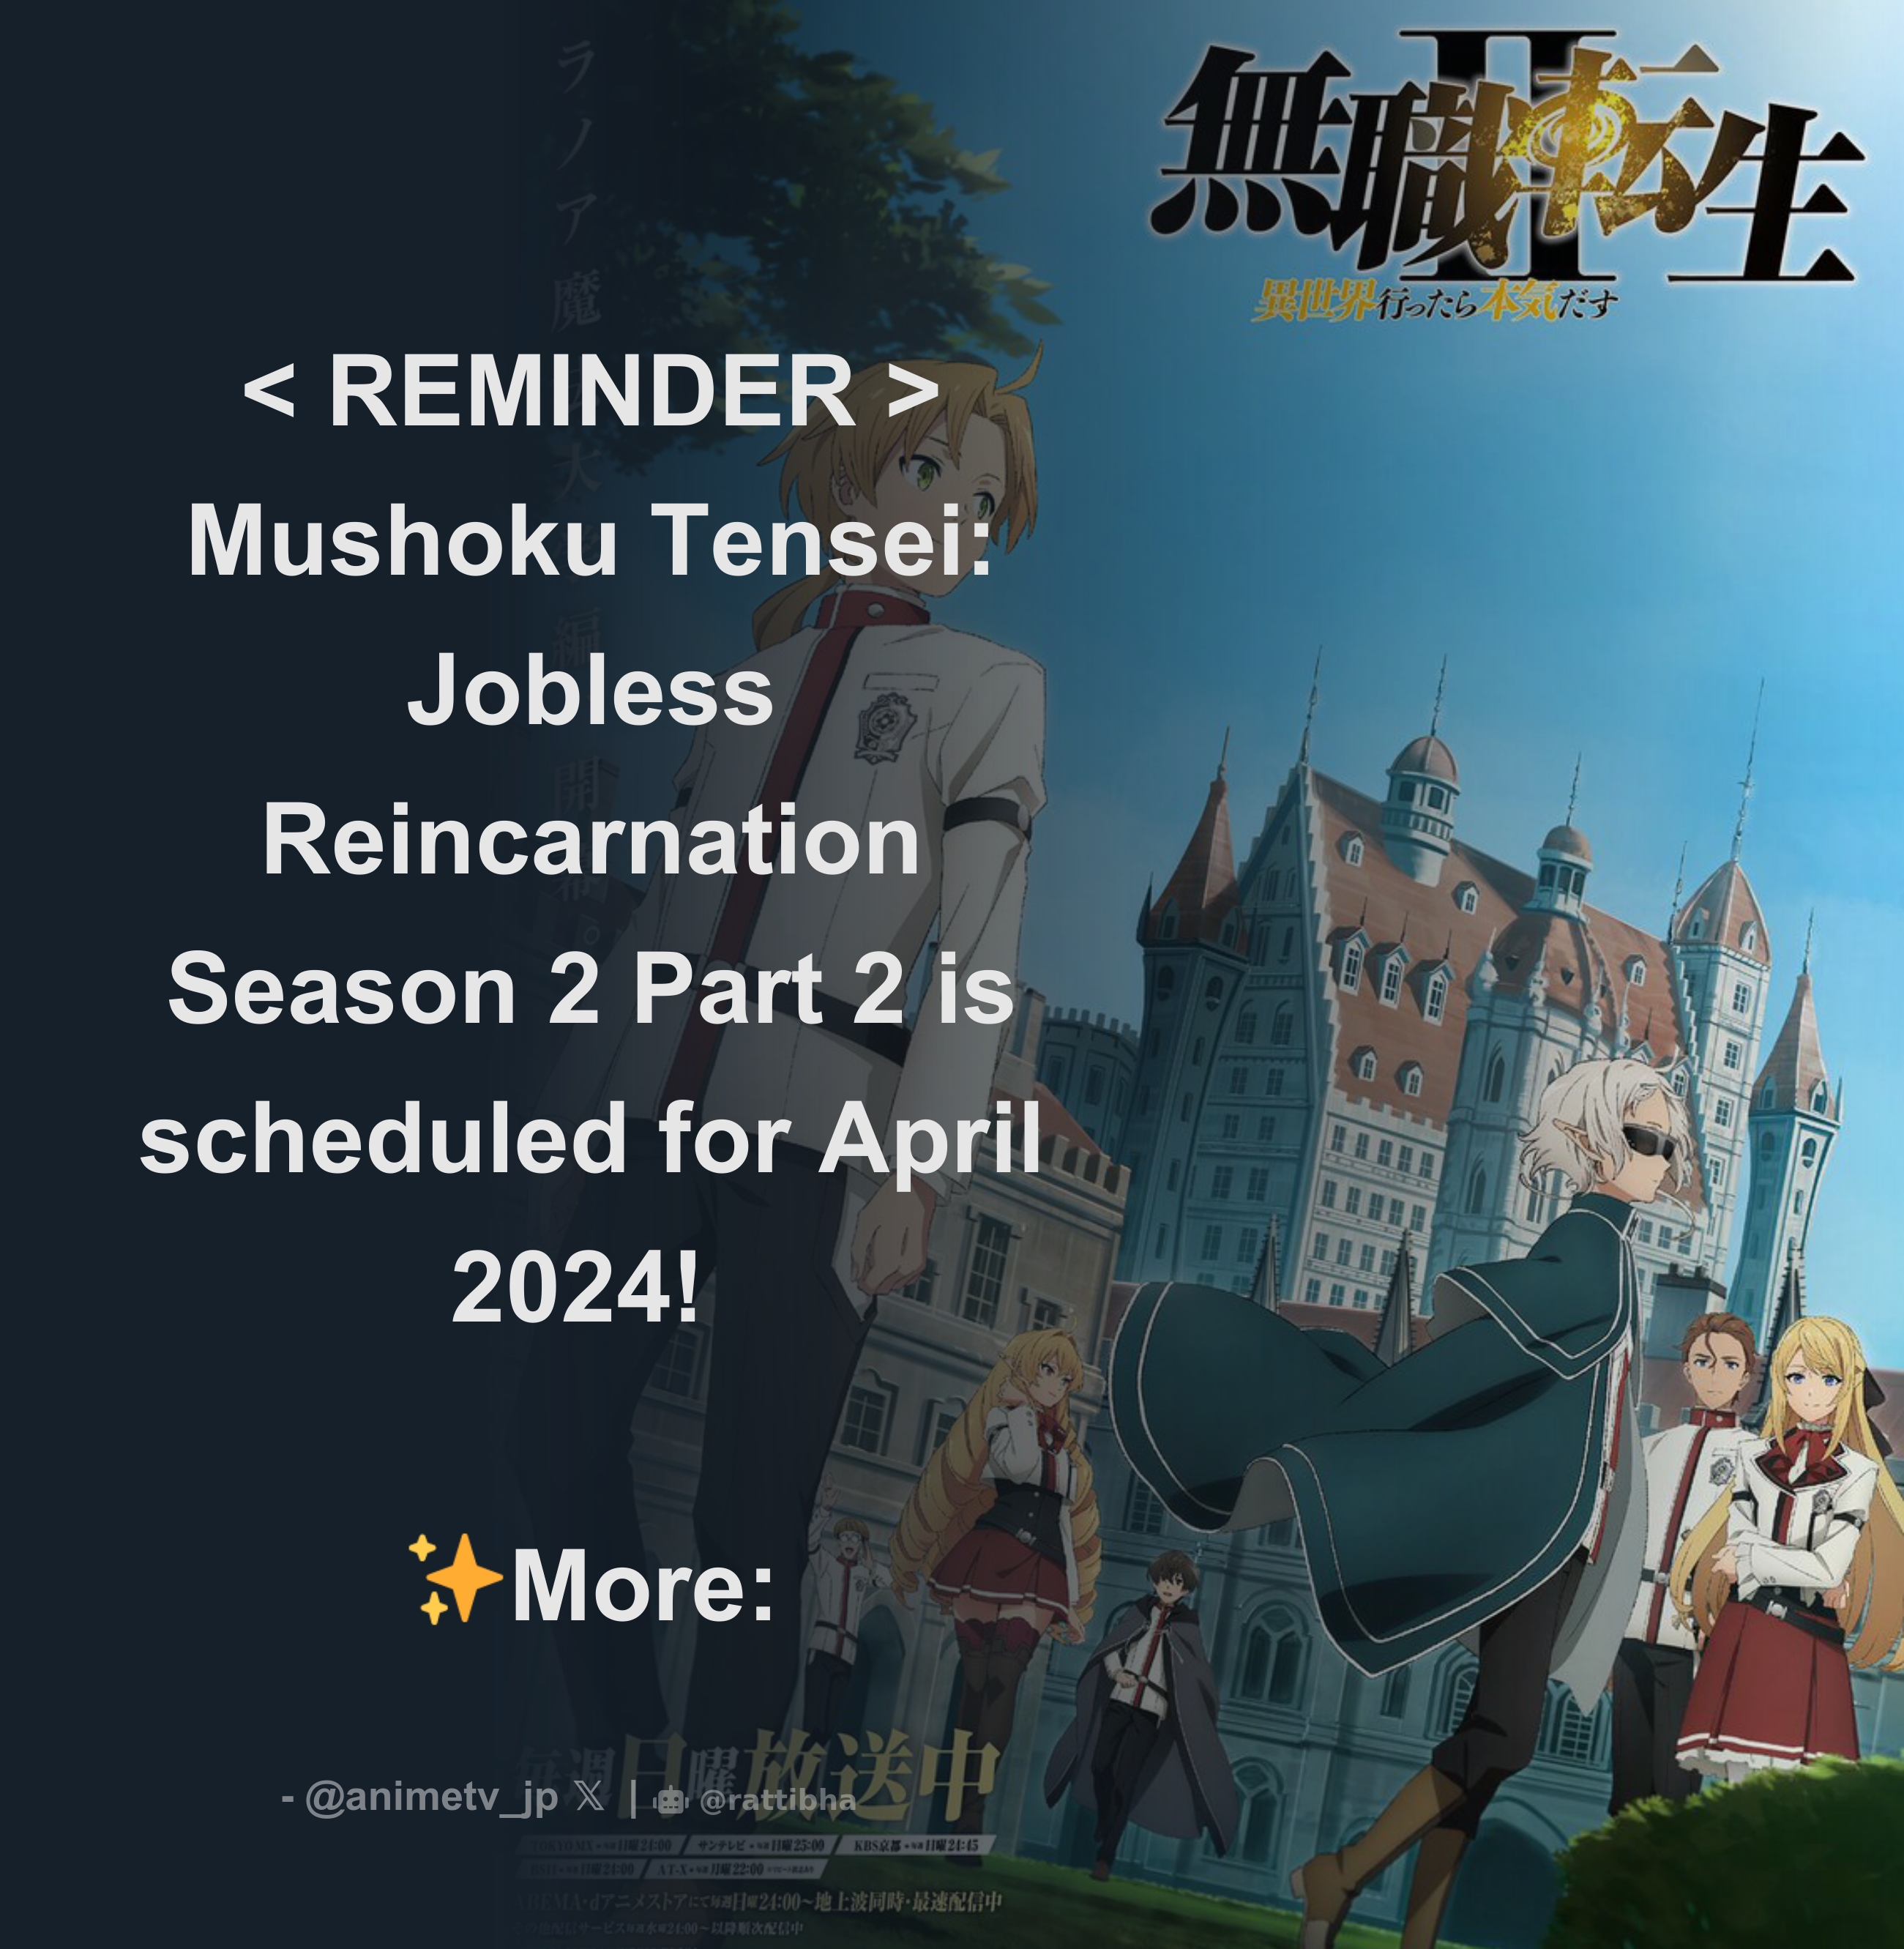 Mushoku Tensei season 2 part 2: Release information, what to